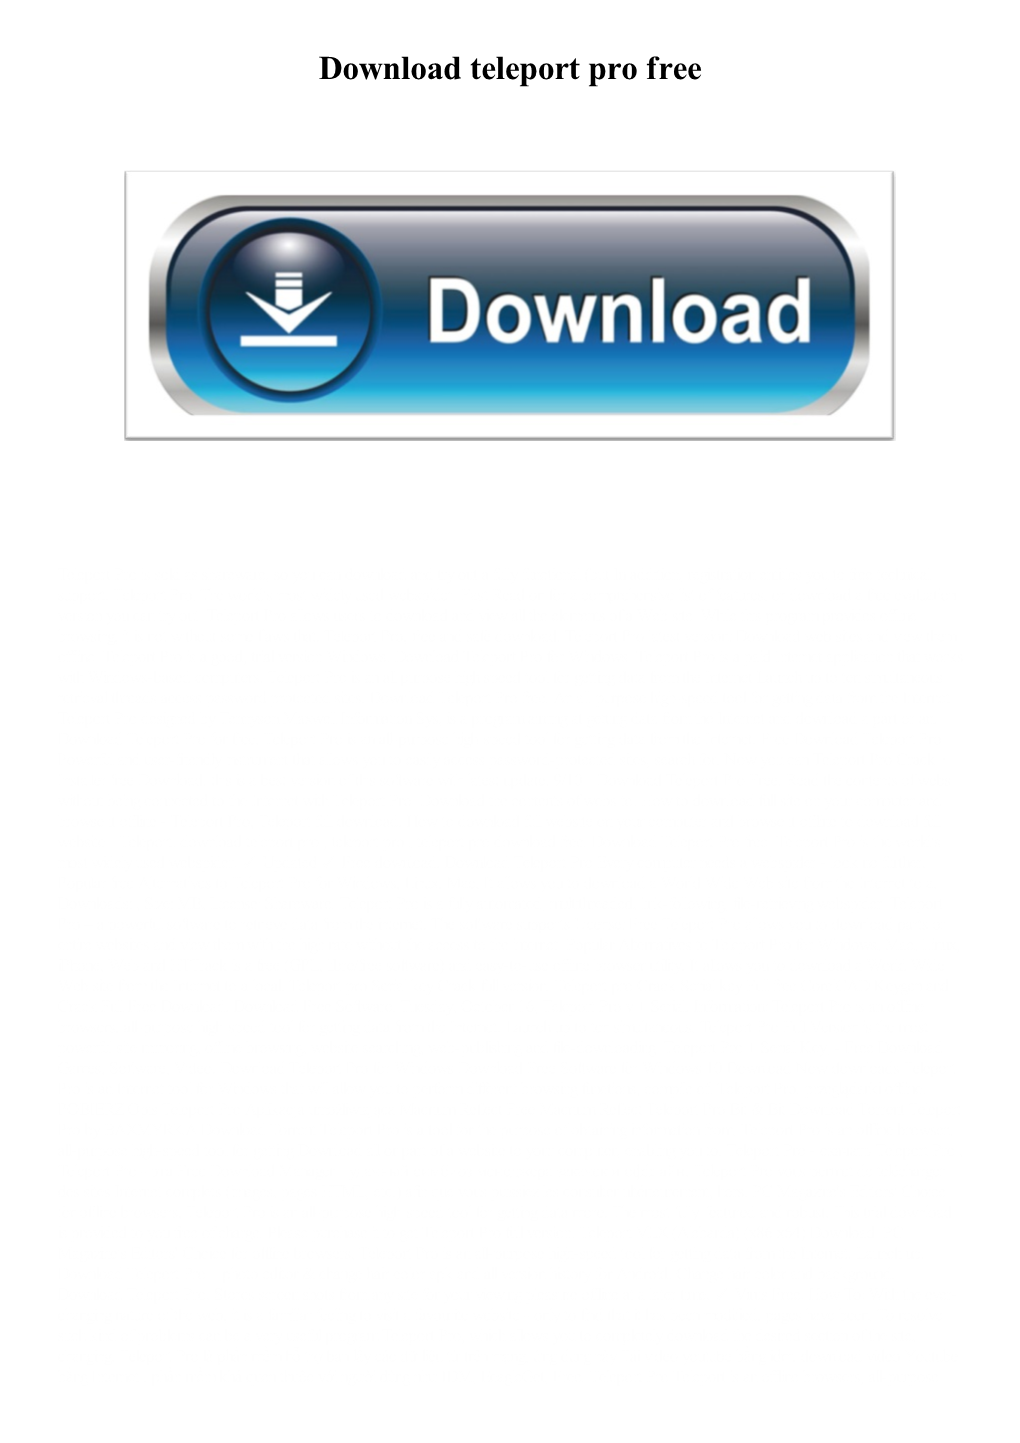 Download Teleport Pro Free